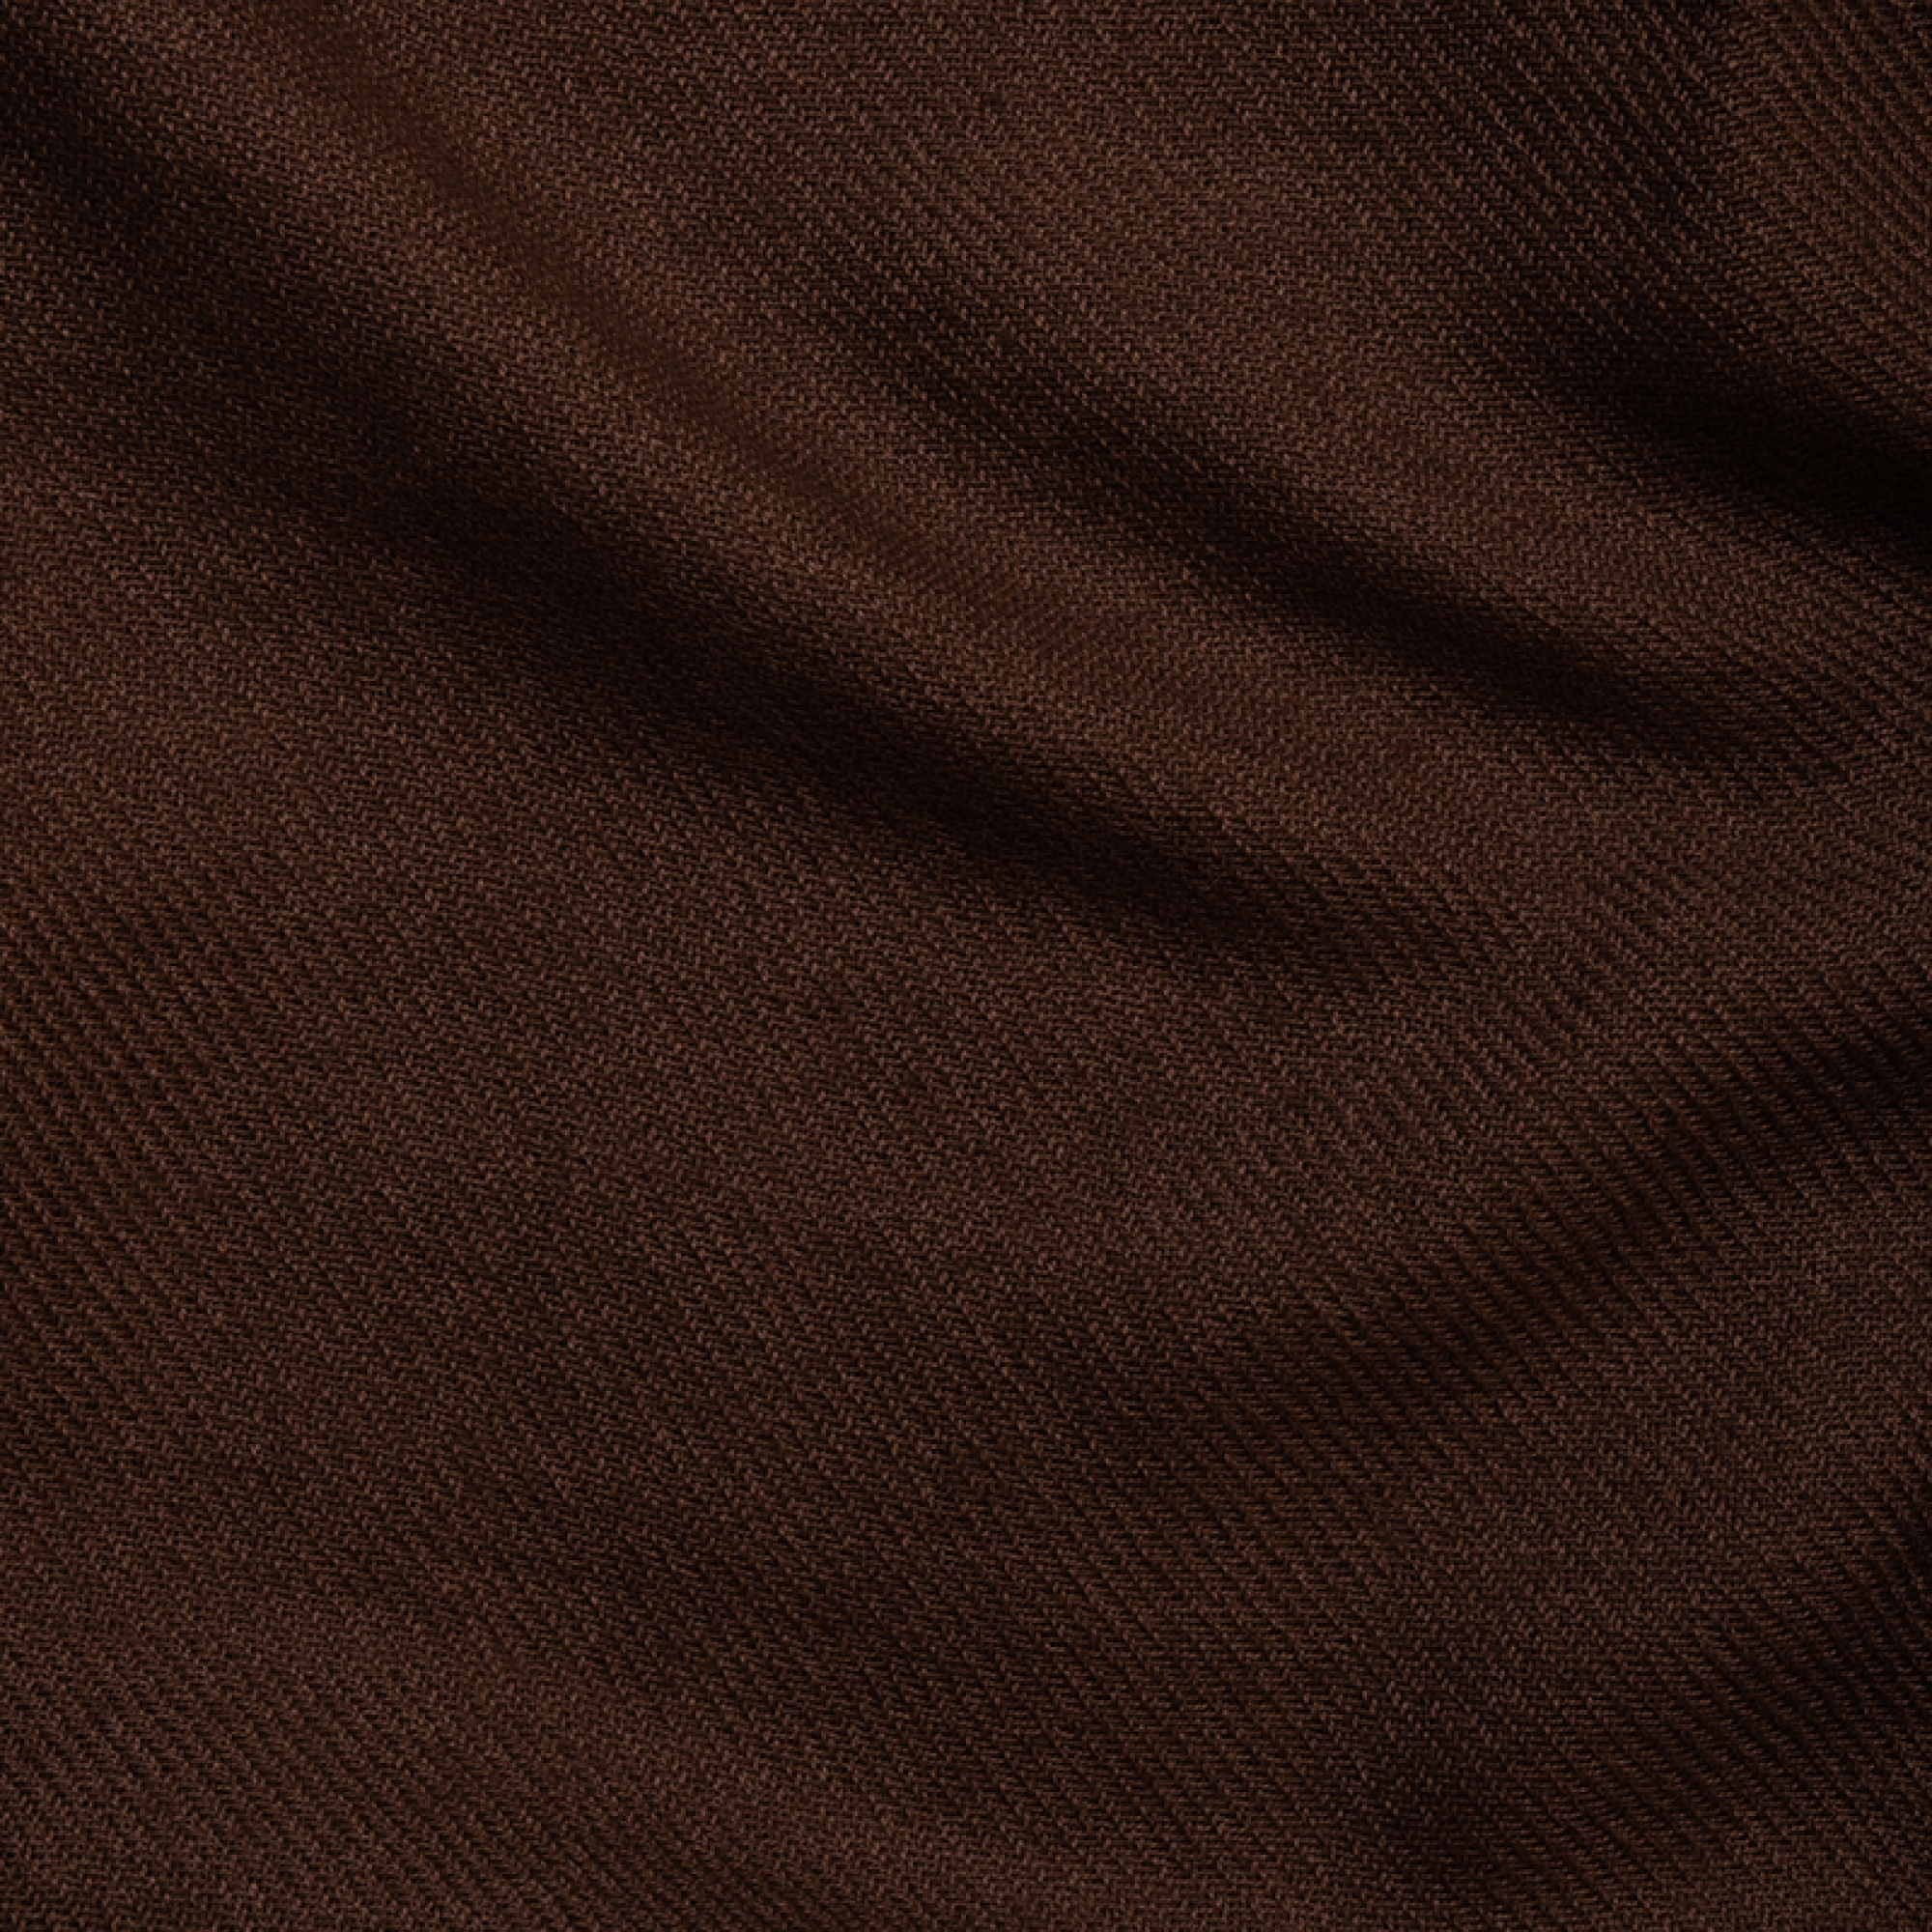 Cashmere accessories blanket frisbi 147 x 203 cacao 147 x 203 cm